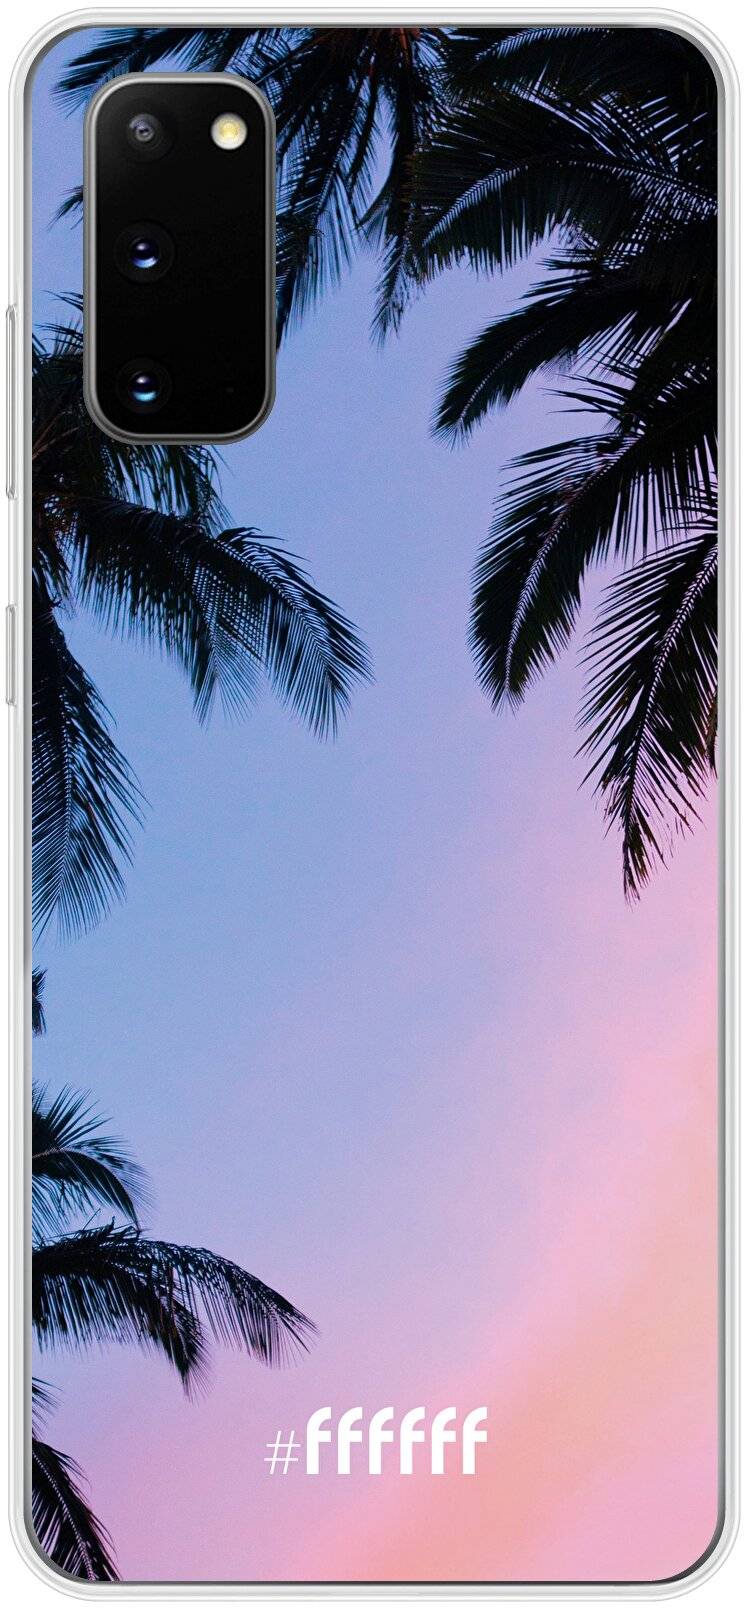 Sunset Palms Galaxy S20